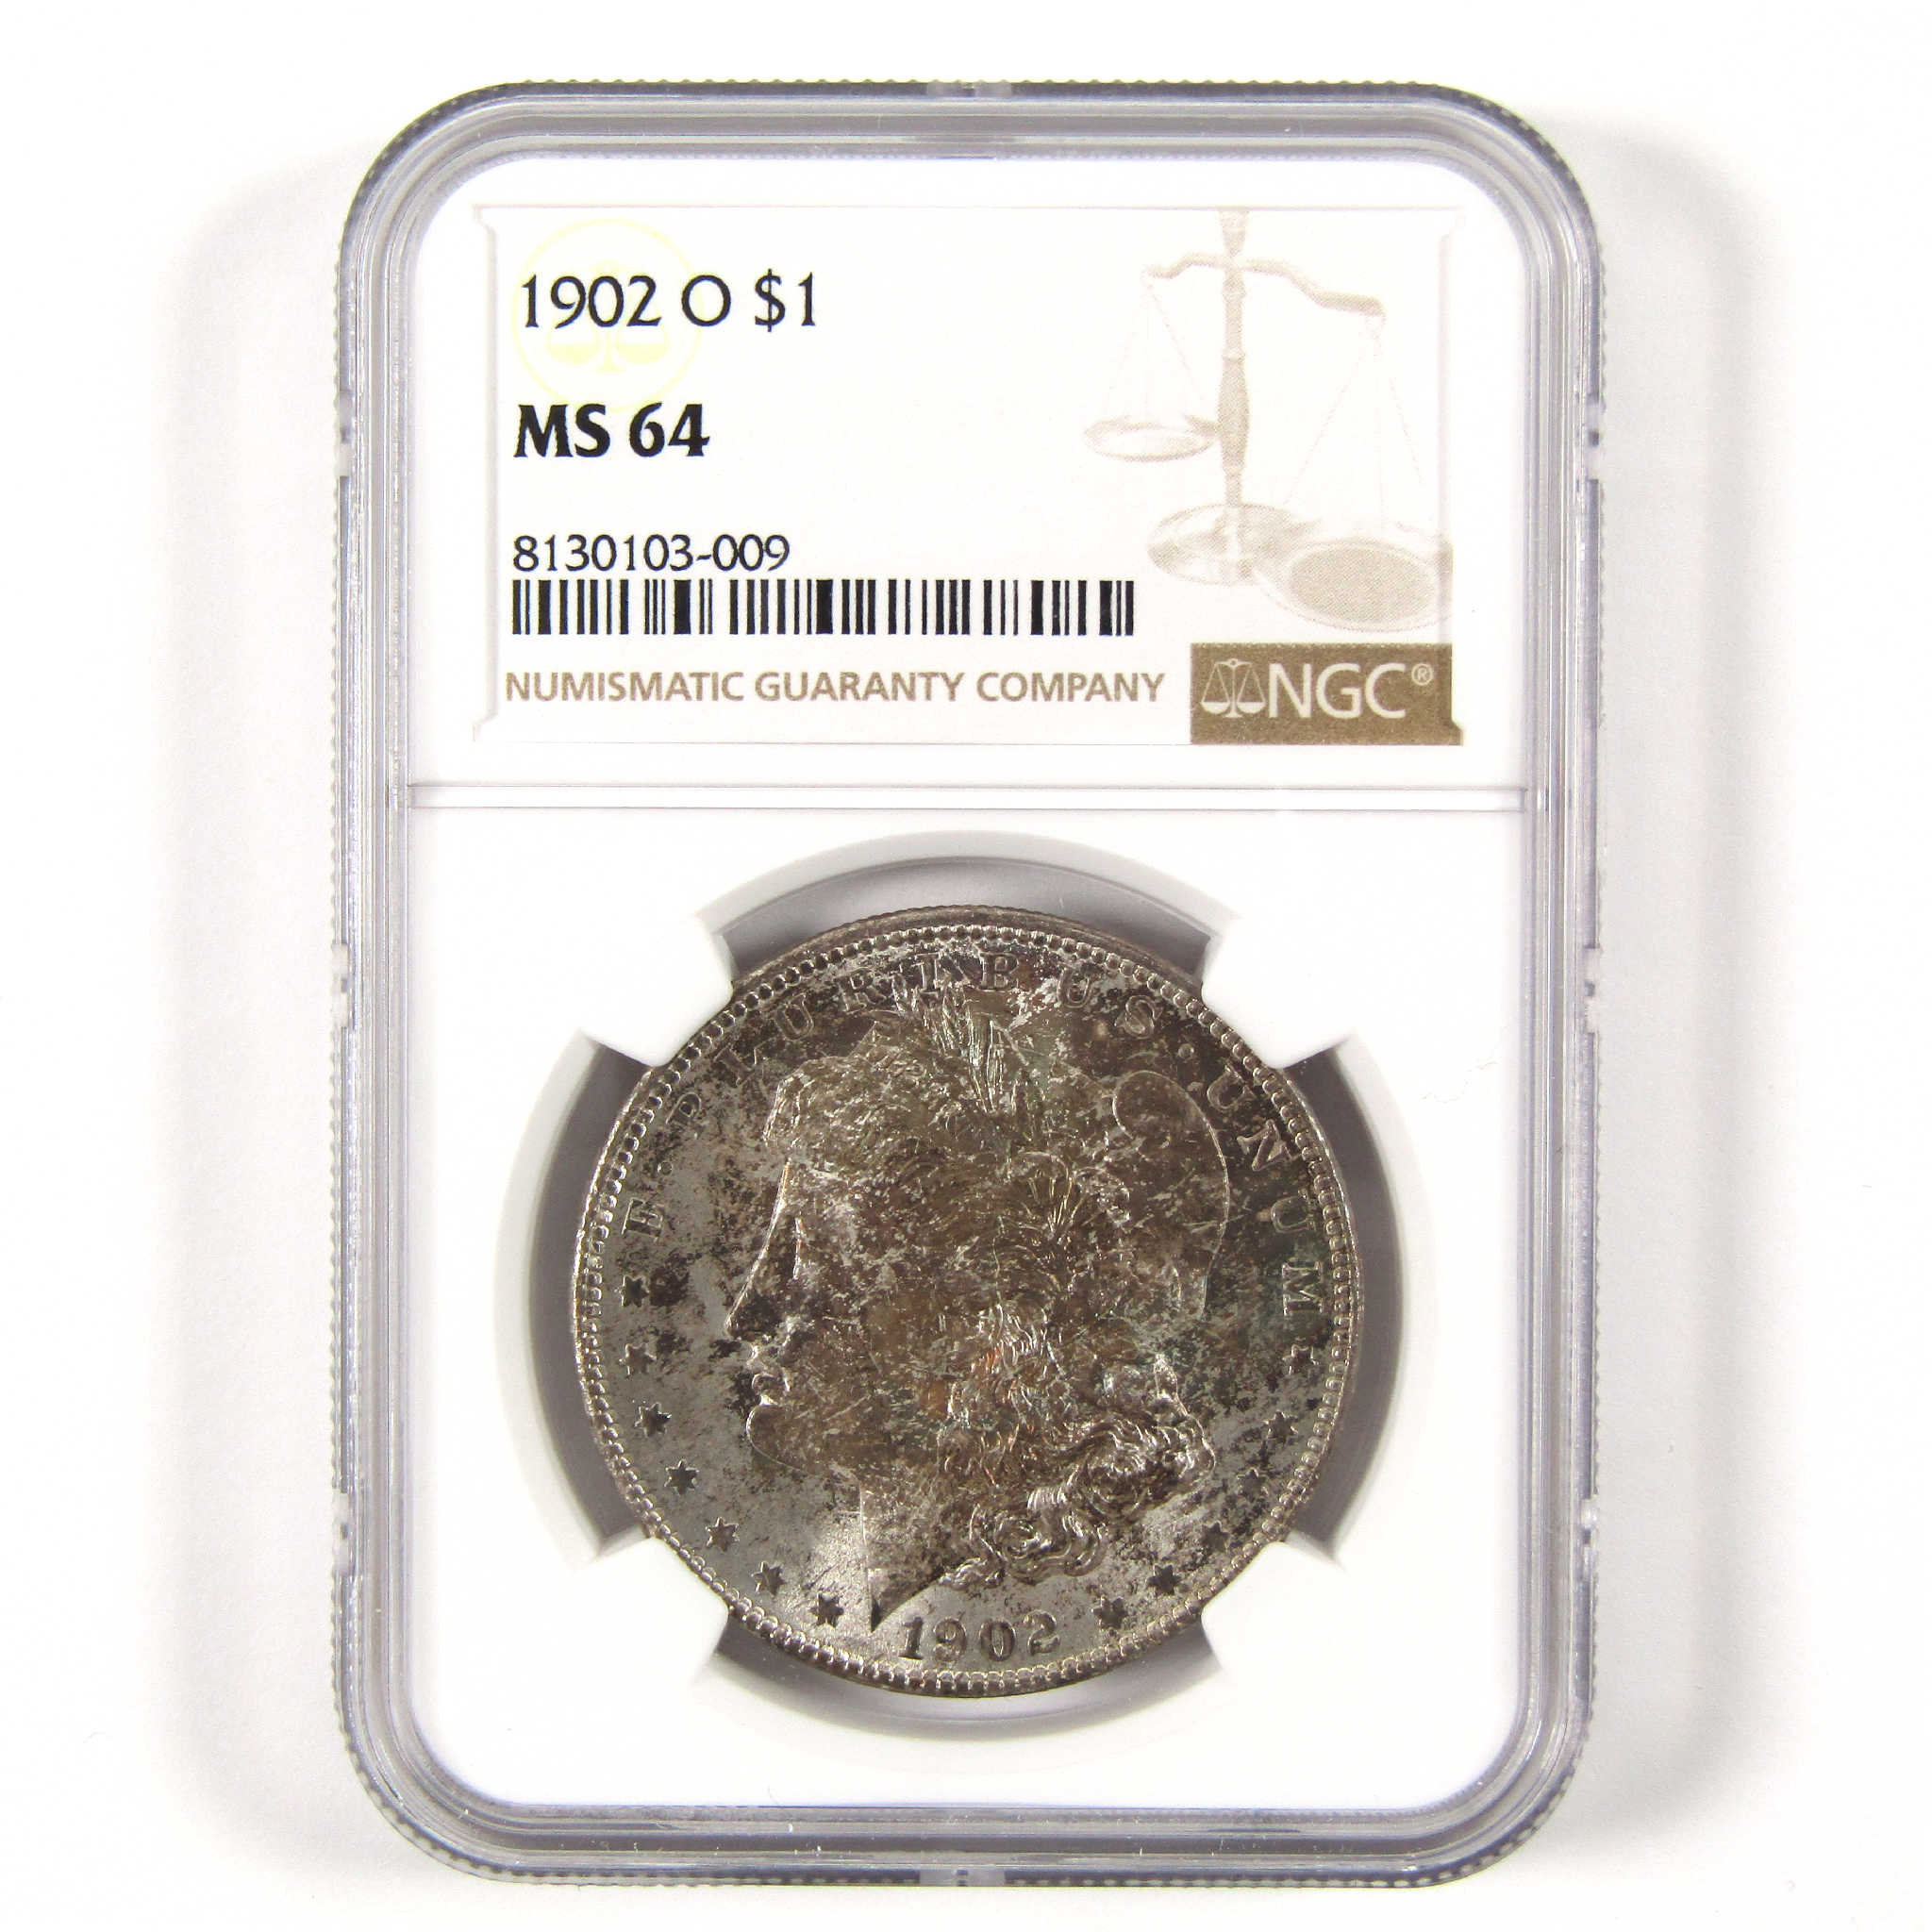 1902 O Morgan Dollar MS 64 NGC Silver $1 Uncirculated Coin SKU:CPC6283 - Morgan coin - Morgan silver dollar - Morgan silver dollar for sale - Profile Coins &amp; Collectibles